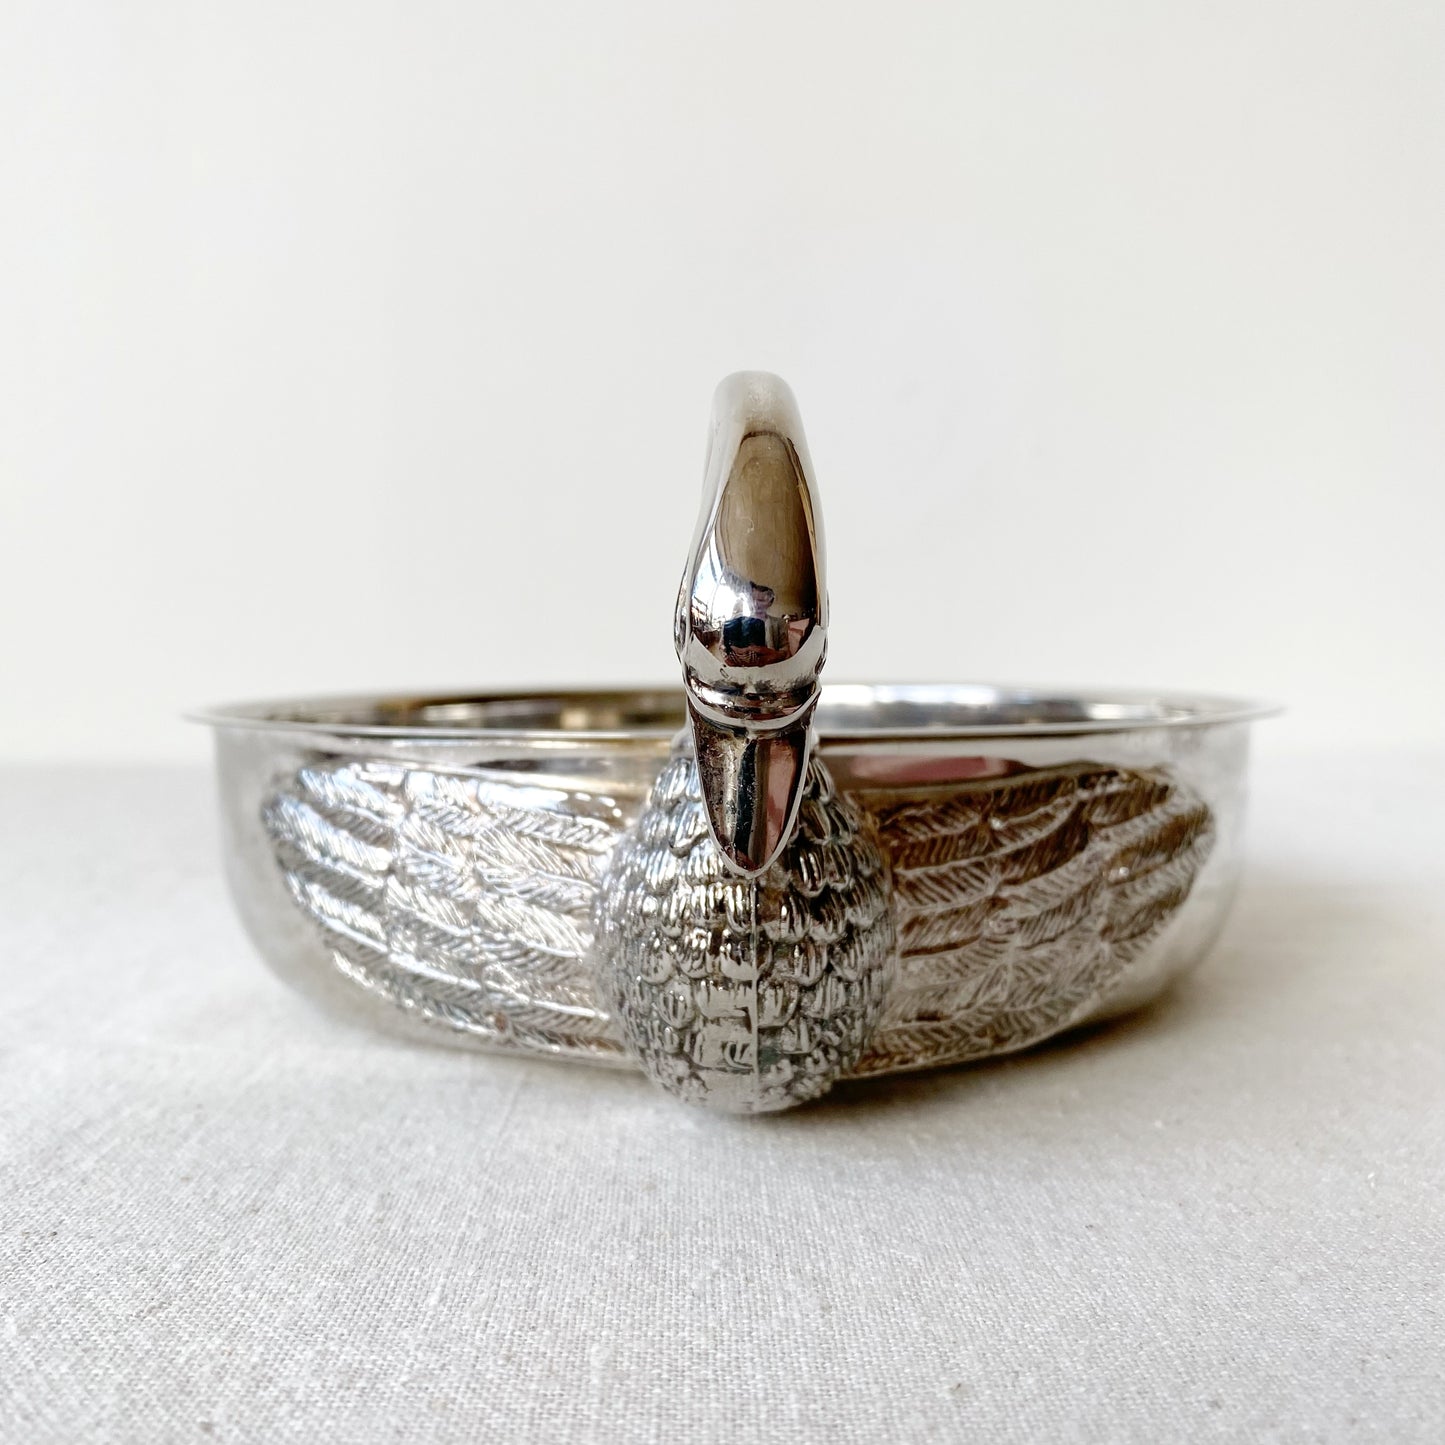 Vintage Silver-plated Dual Swan Bowl